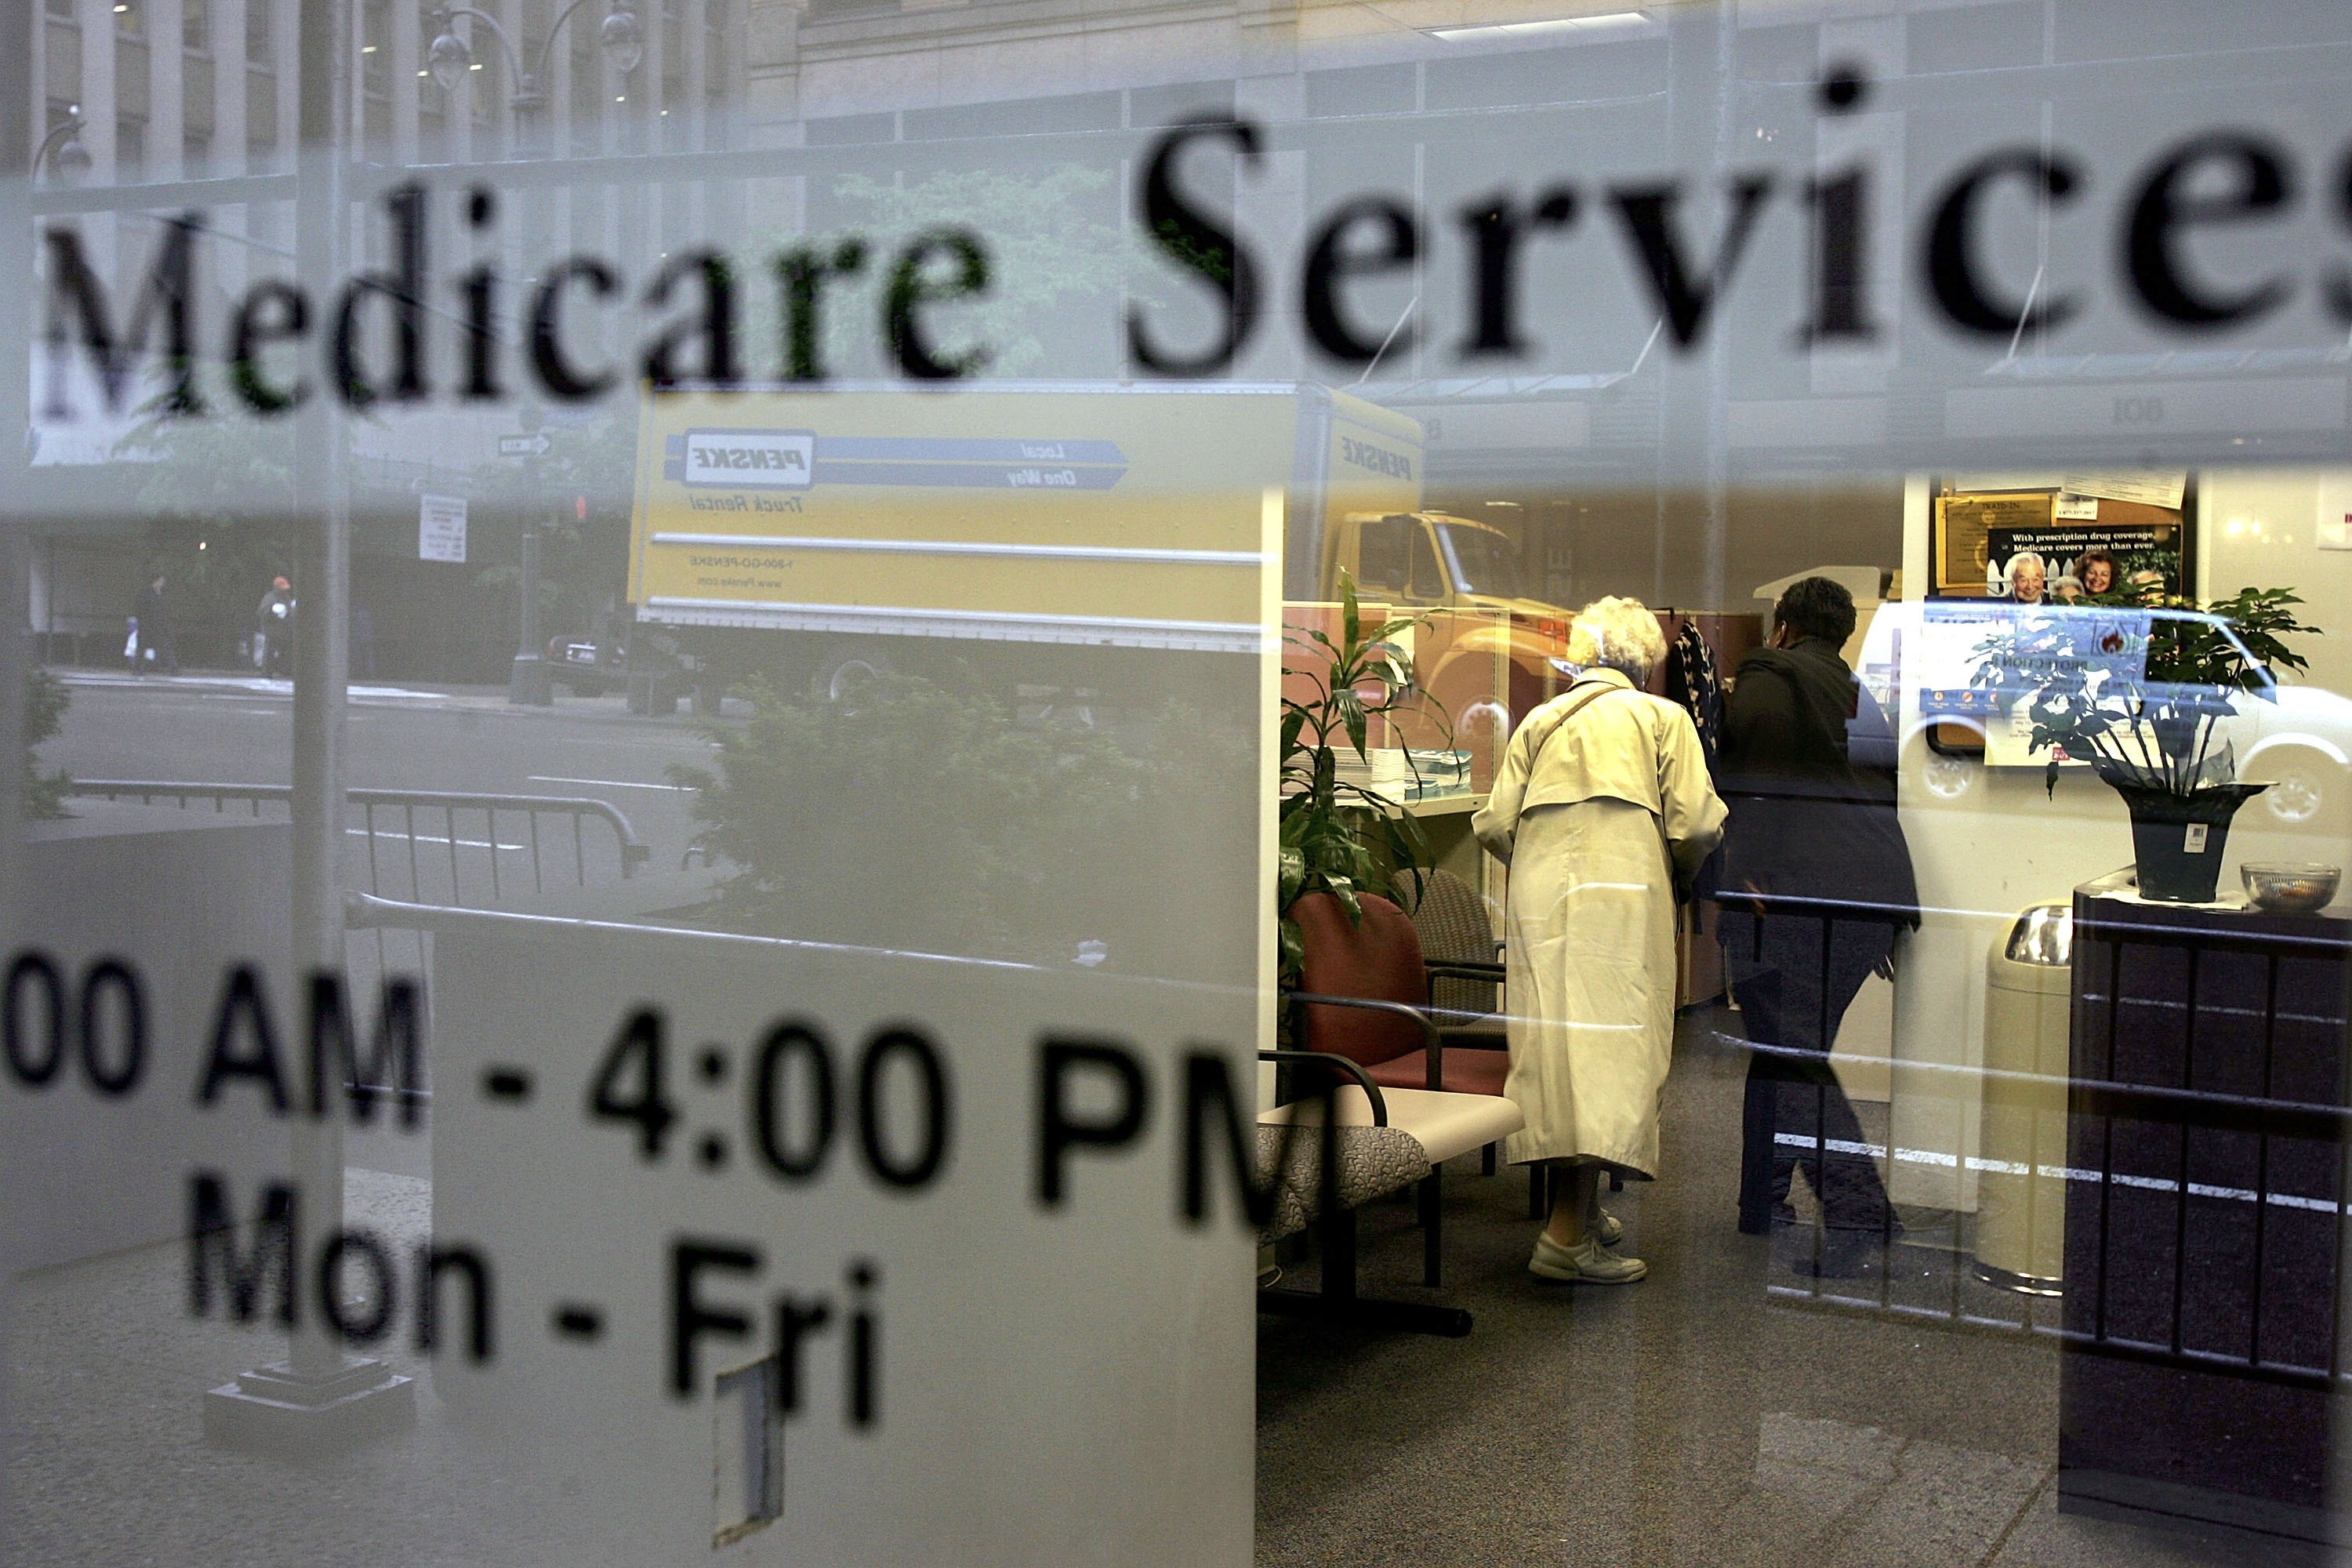 How Medicare can save $500 billion - The Boston Globe